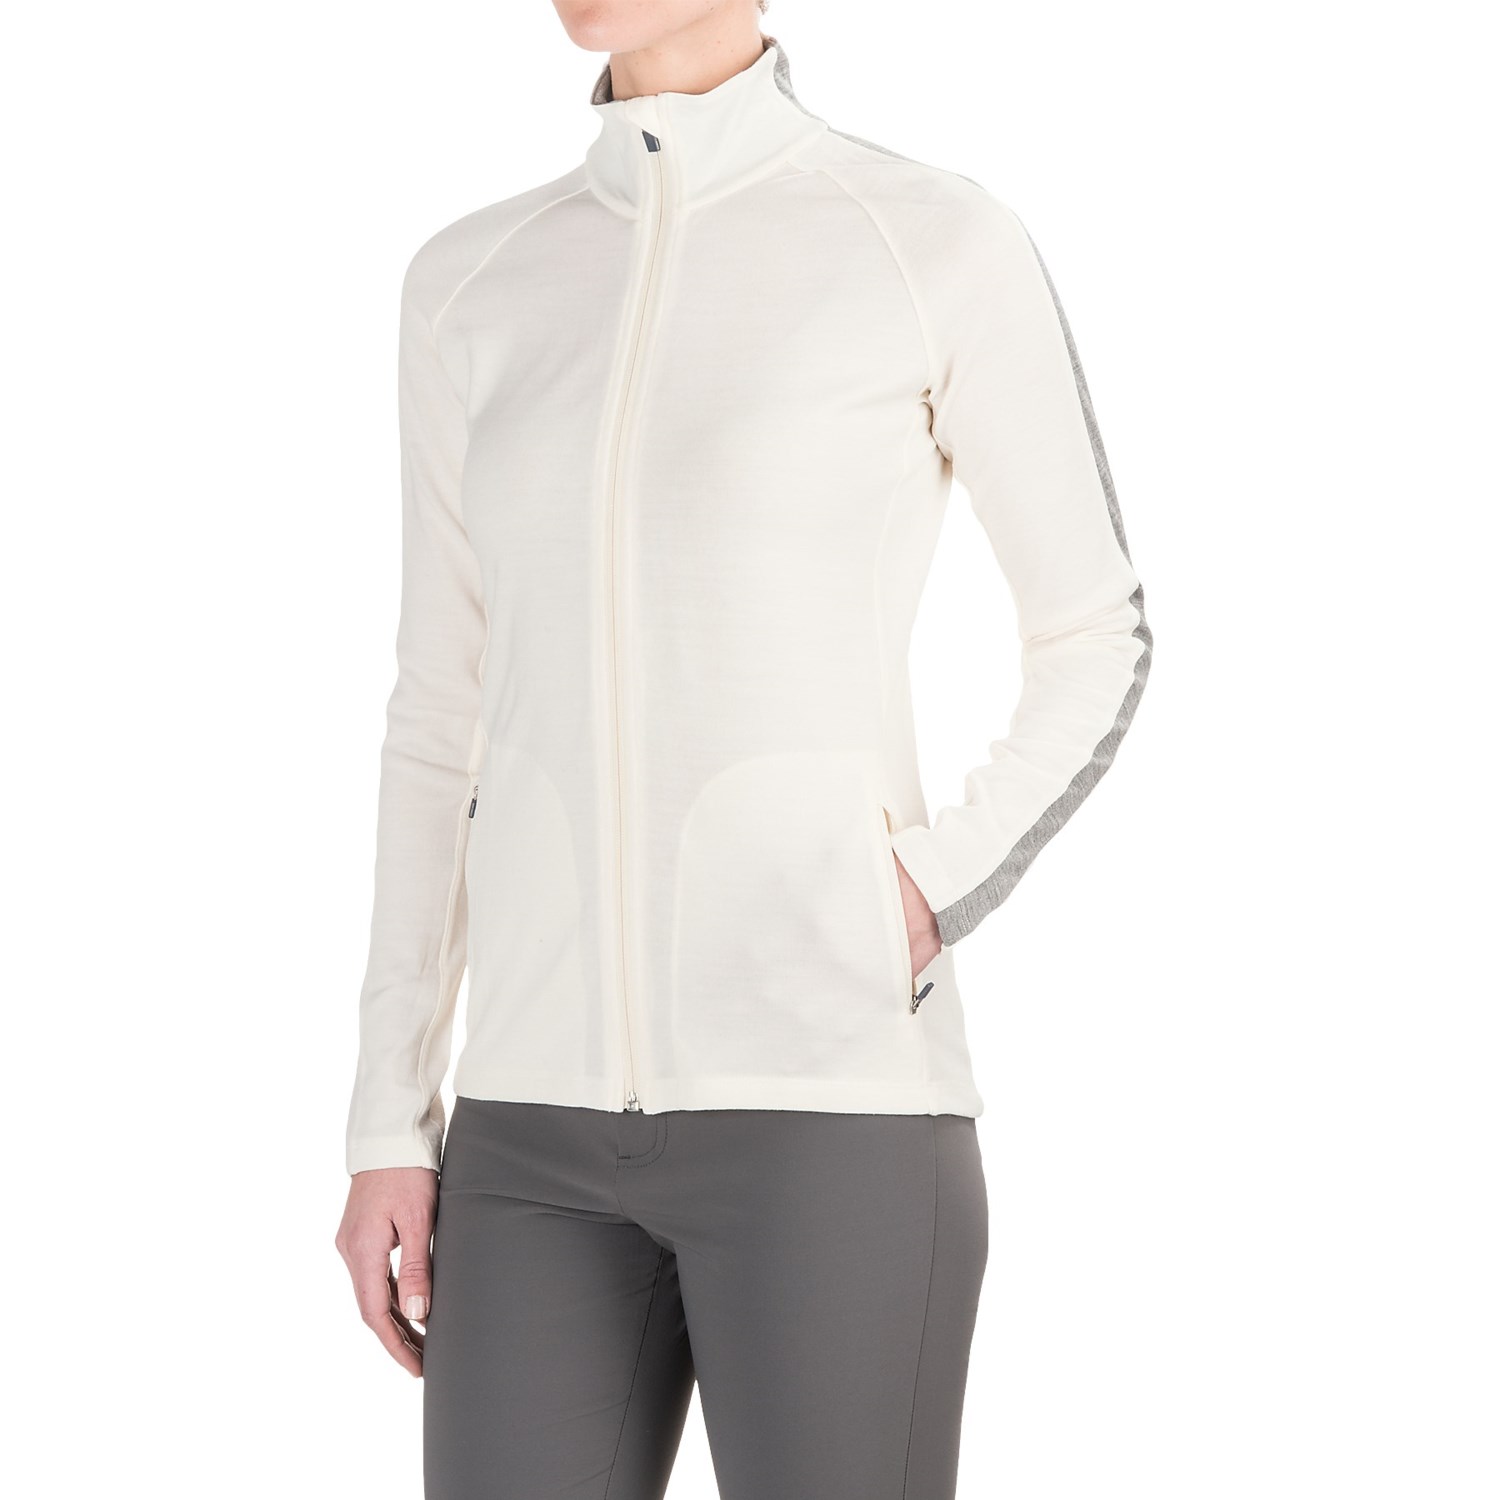 Icebreaker Affinity Zip Shirt Jacket – Merino Wool (For Women)